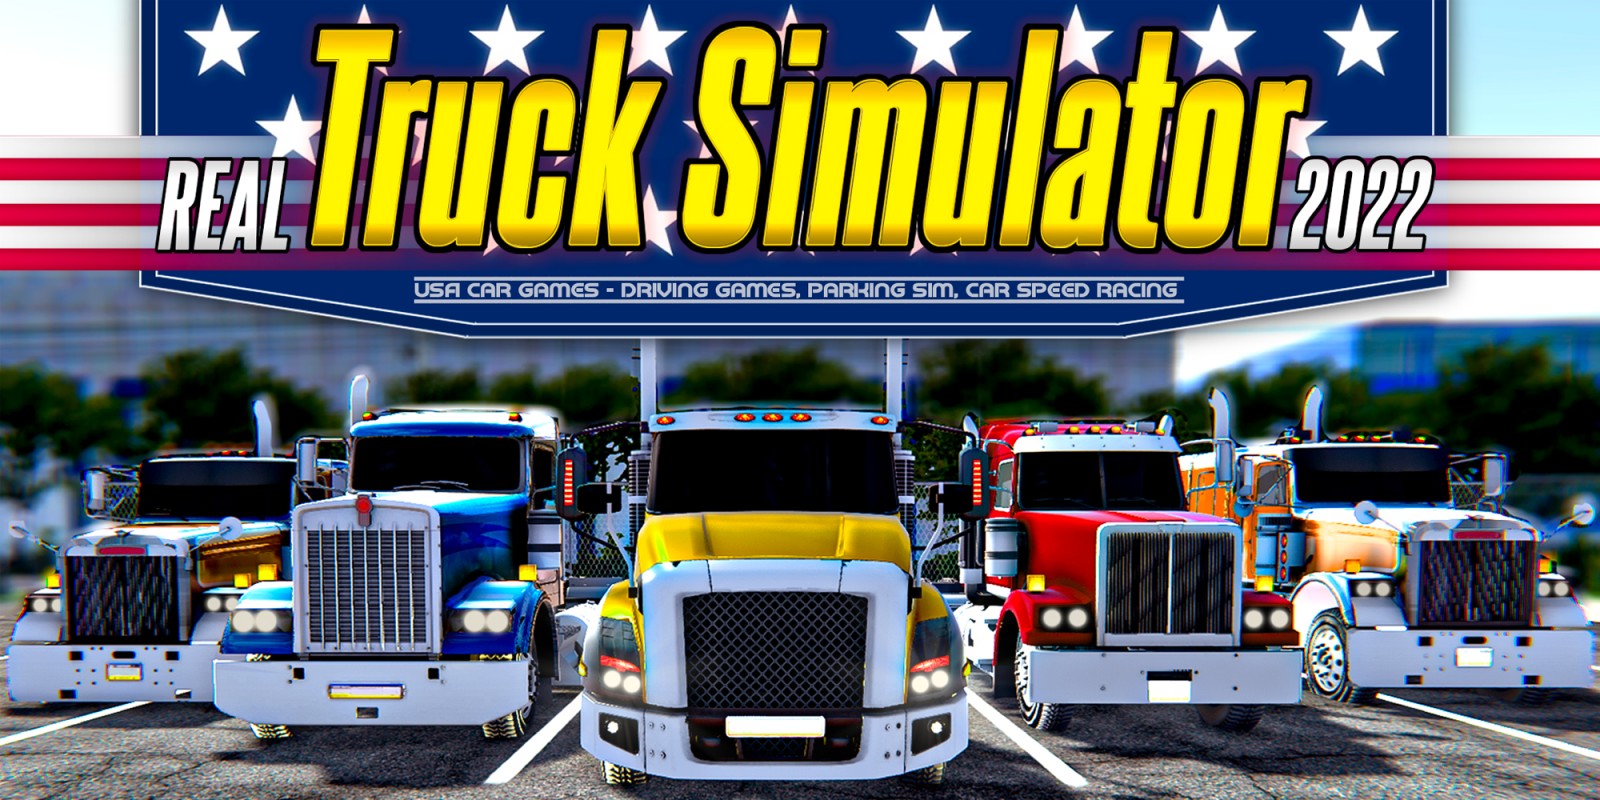 Real Truck Simulator USA Car Games - Driving Games, Parking Sim, Car Racing 2022 Programas Nintendo Switch | Juegos | Nintendo